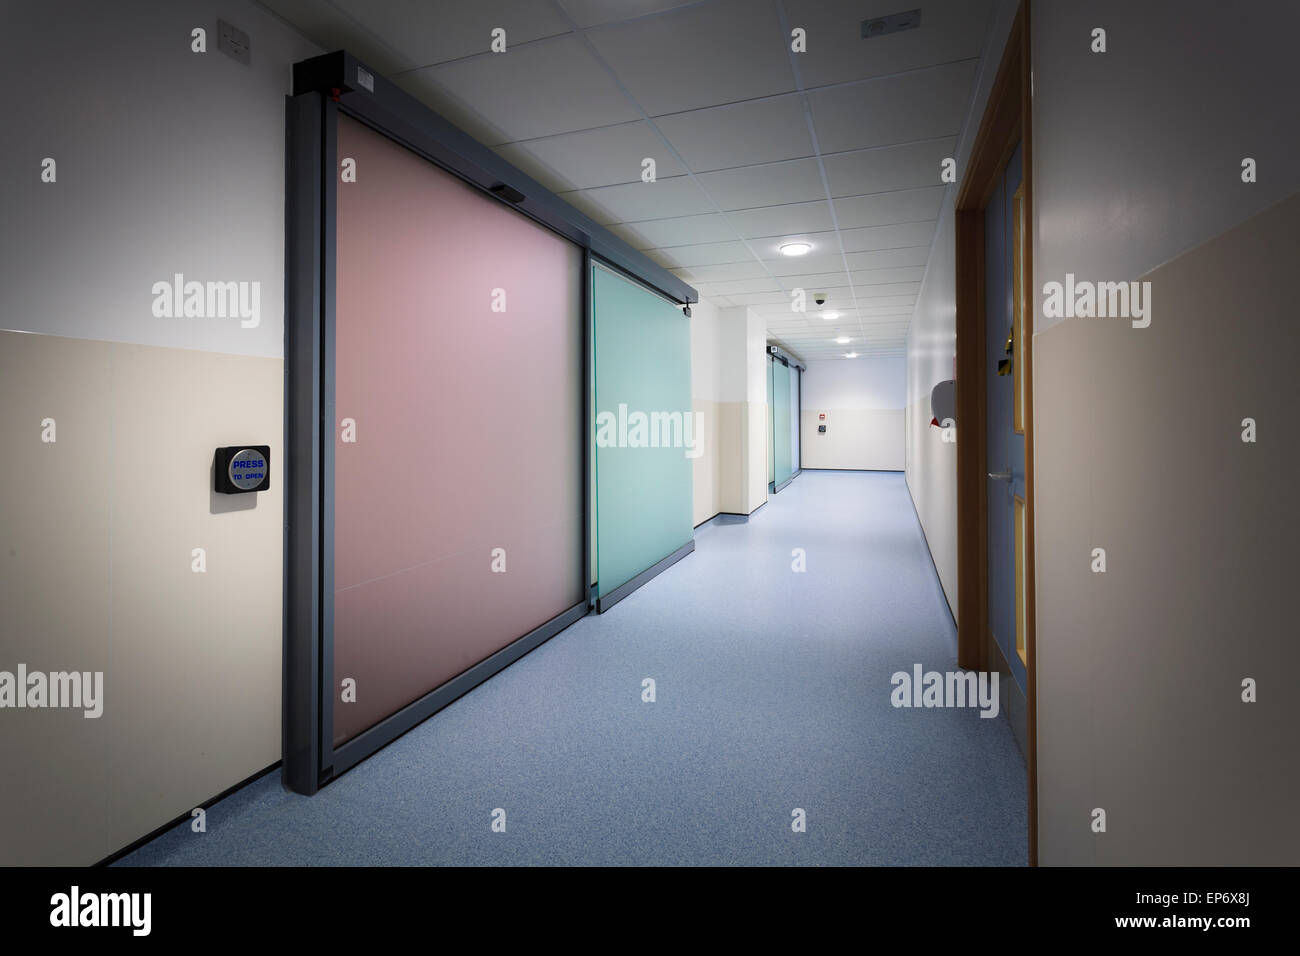 Unoccupied hospital corridor with press to open doors Stock Photo